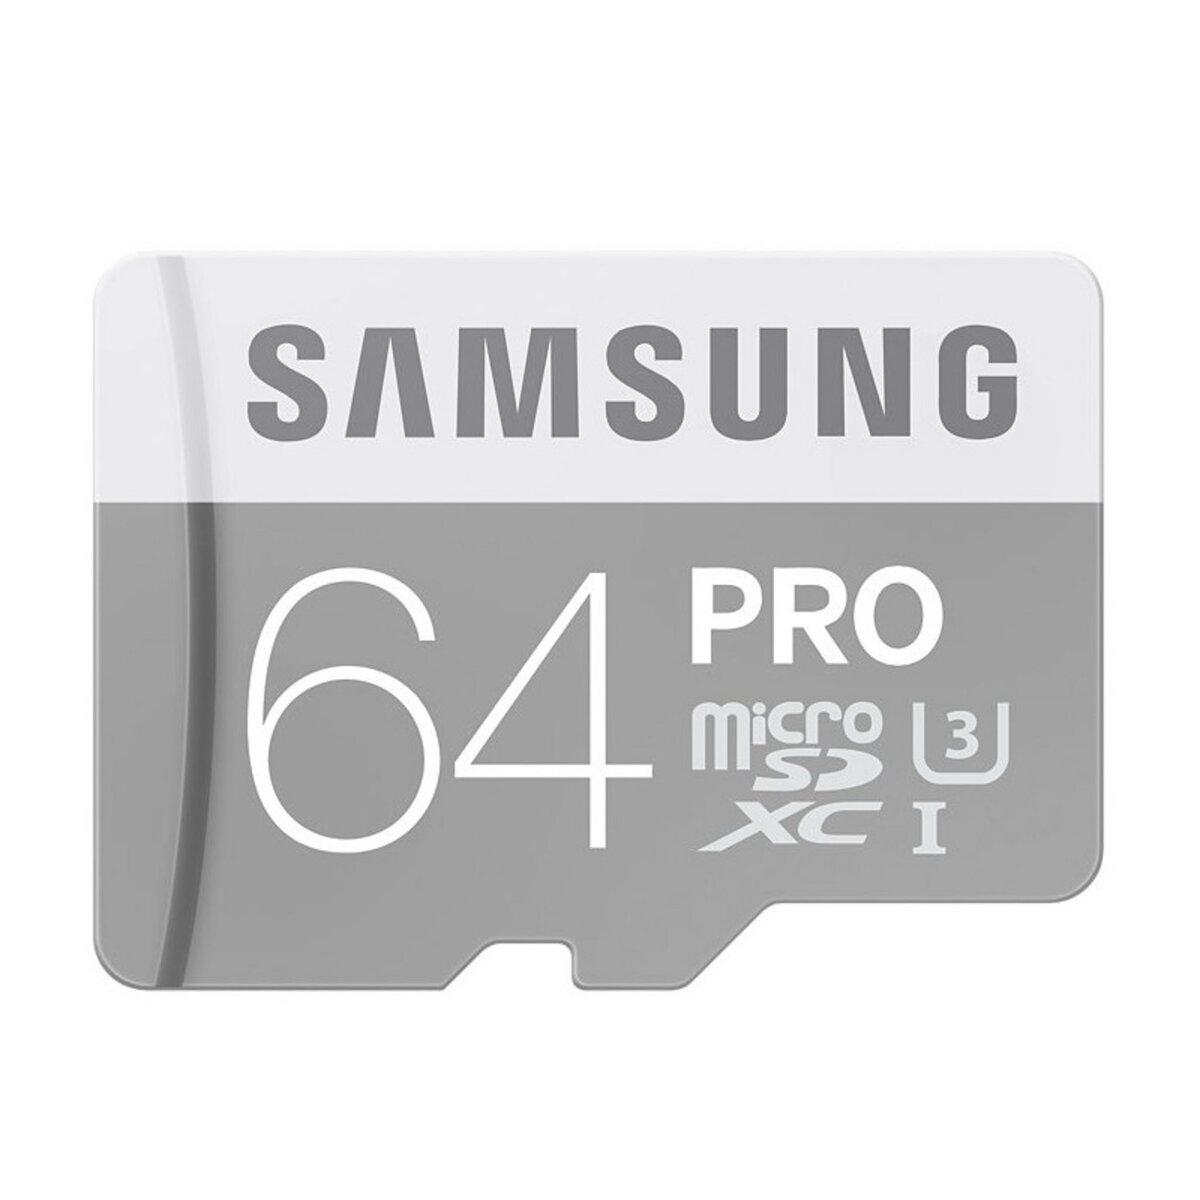 SAMSUNG Micro SDHC 64 Go Pro + Adaptateur - Carte mémoire